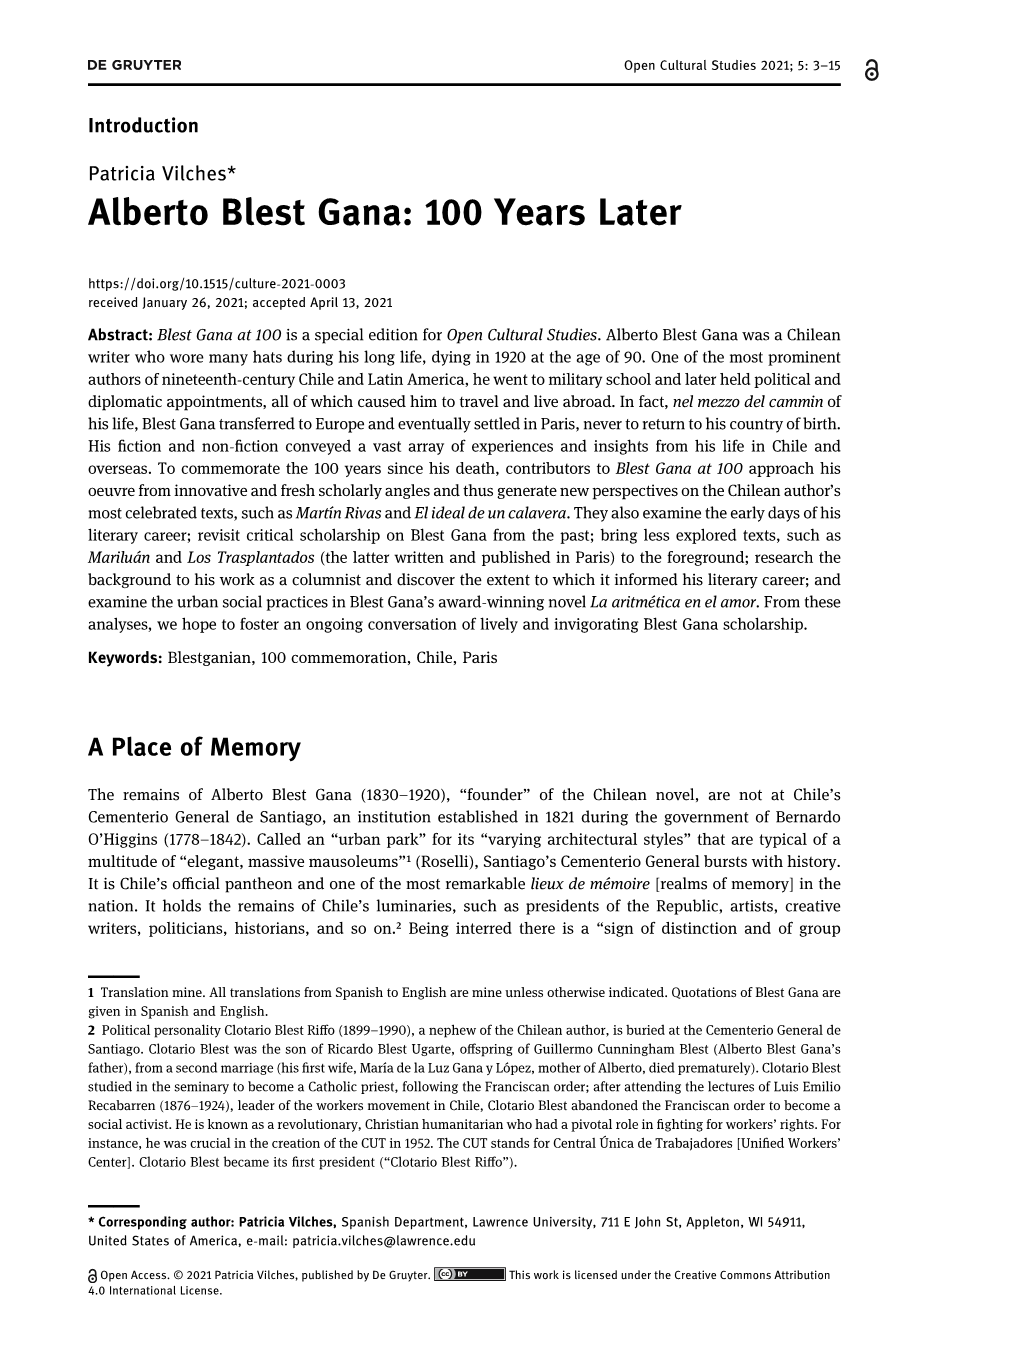 Alberto Blest Gana: 100 Years Later